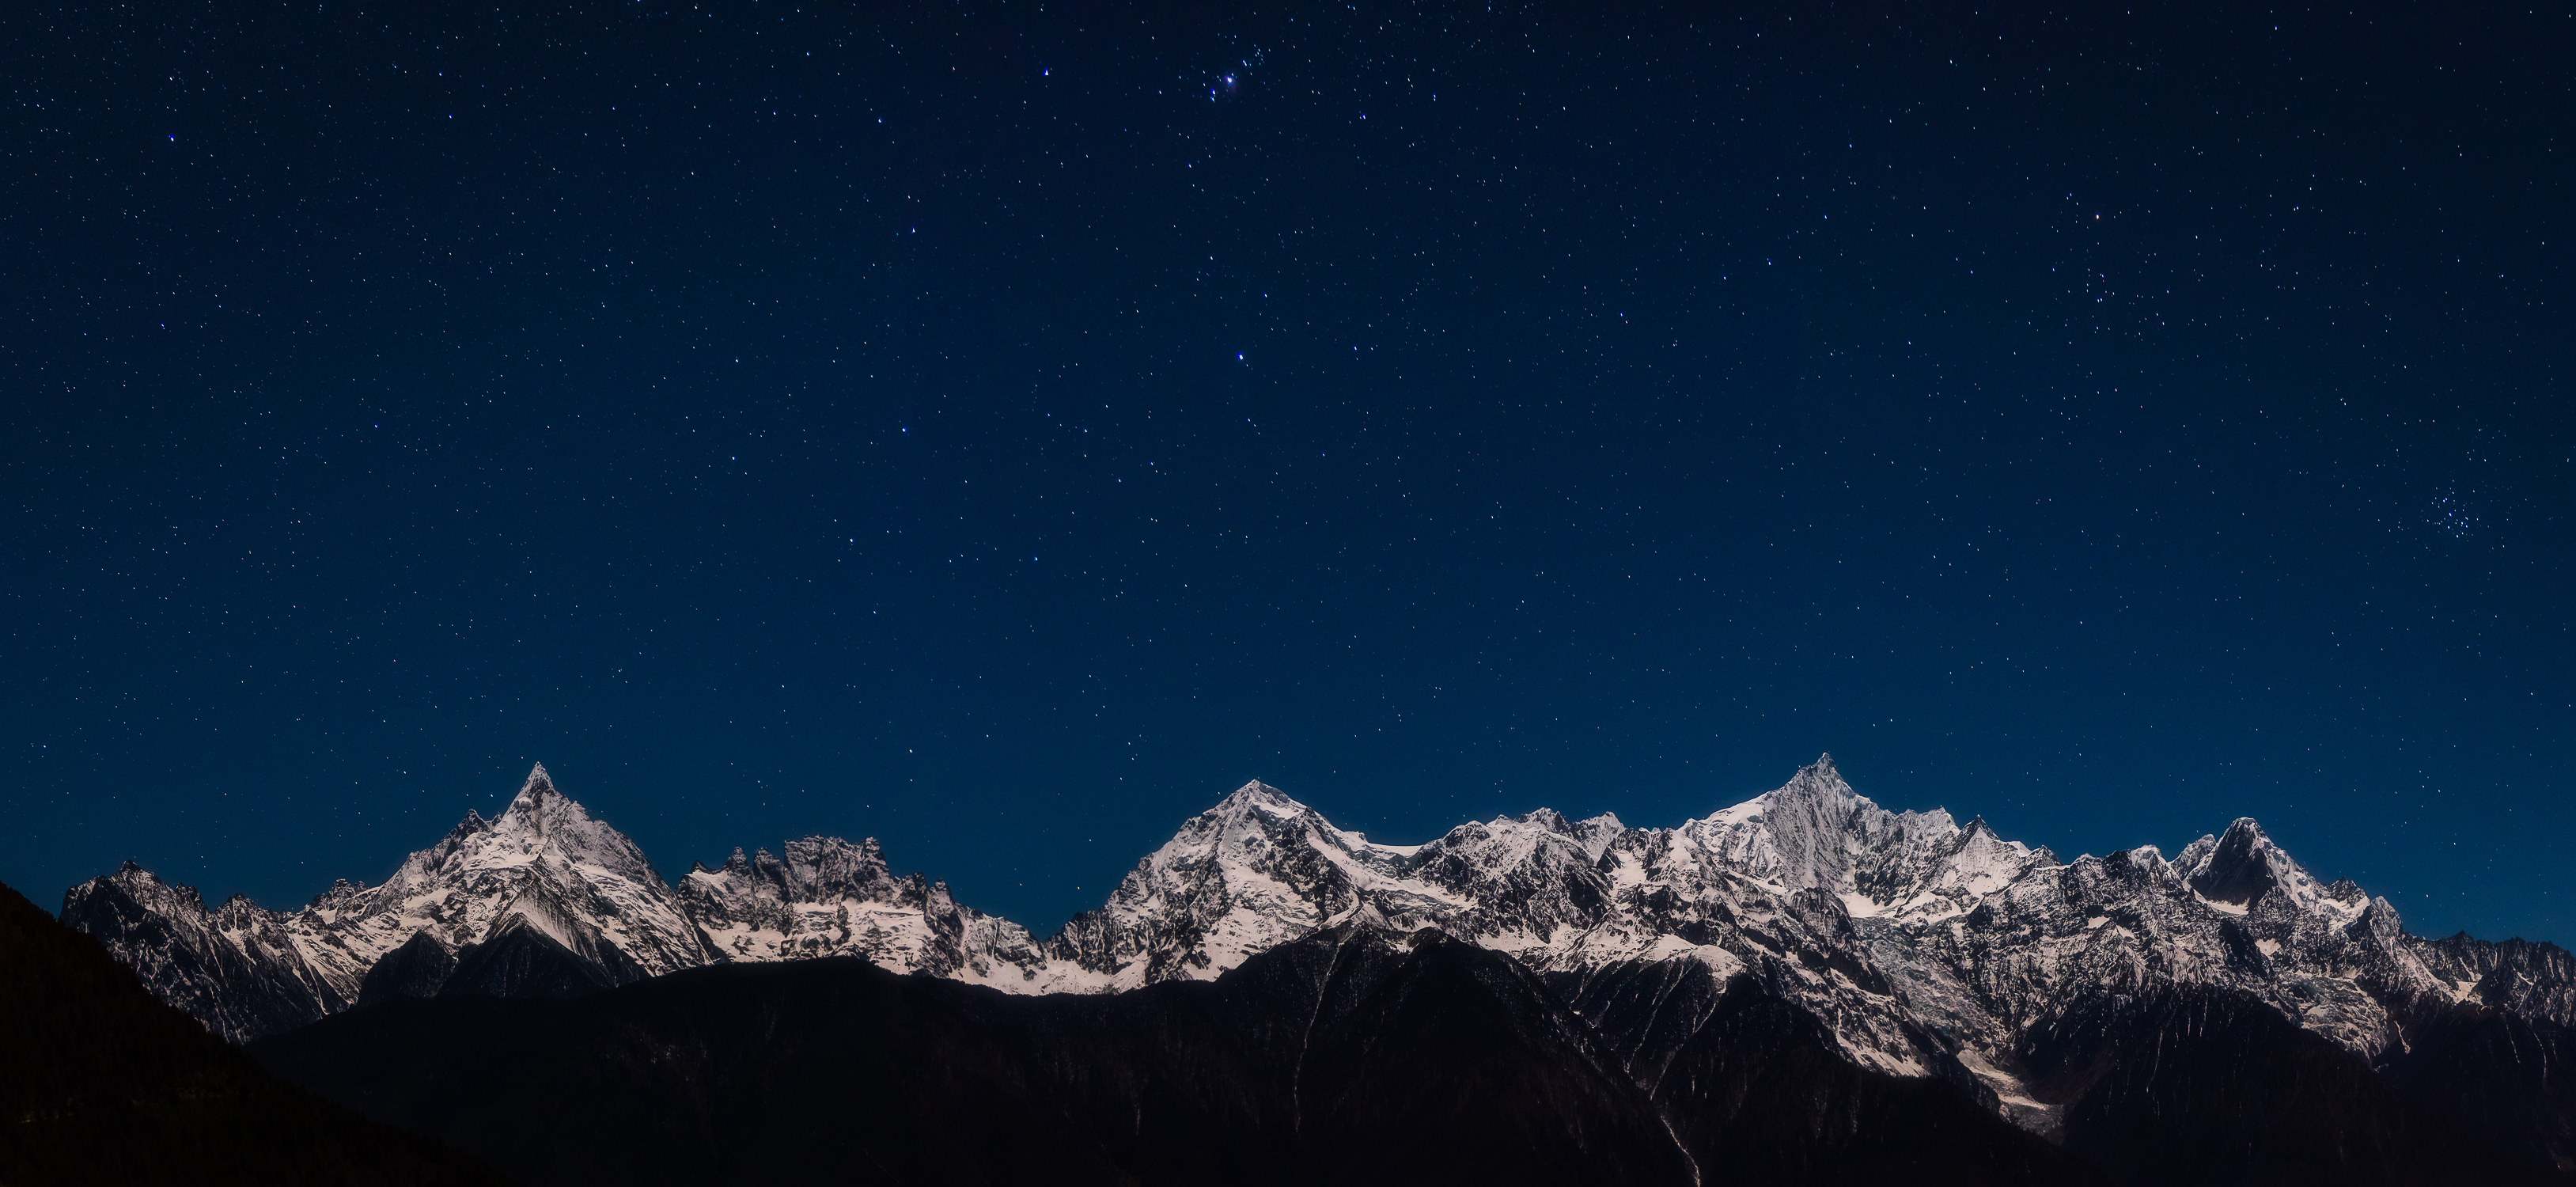 Meili Snow Mountain · Starry Sky